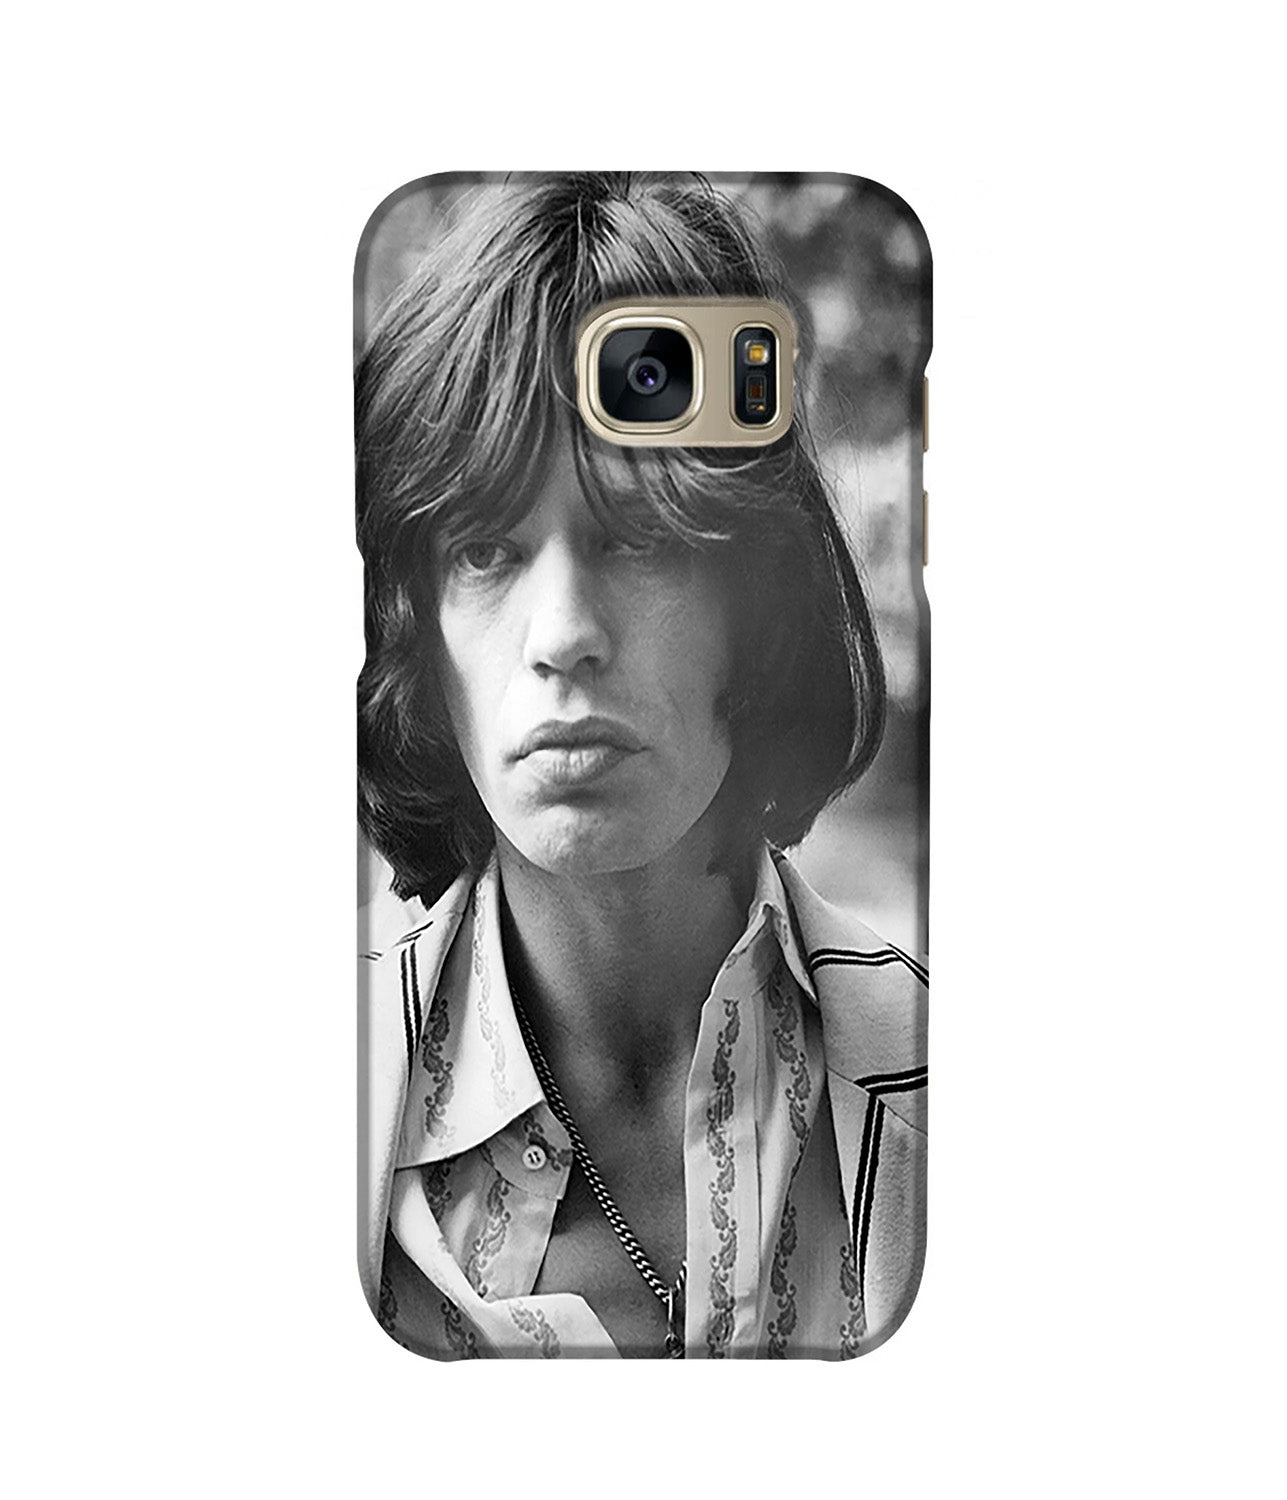 Mick Jagger in 1969 Phone Case Samsung S7 Edge